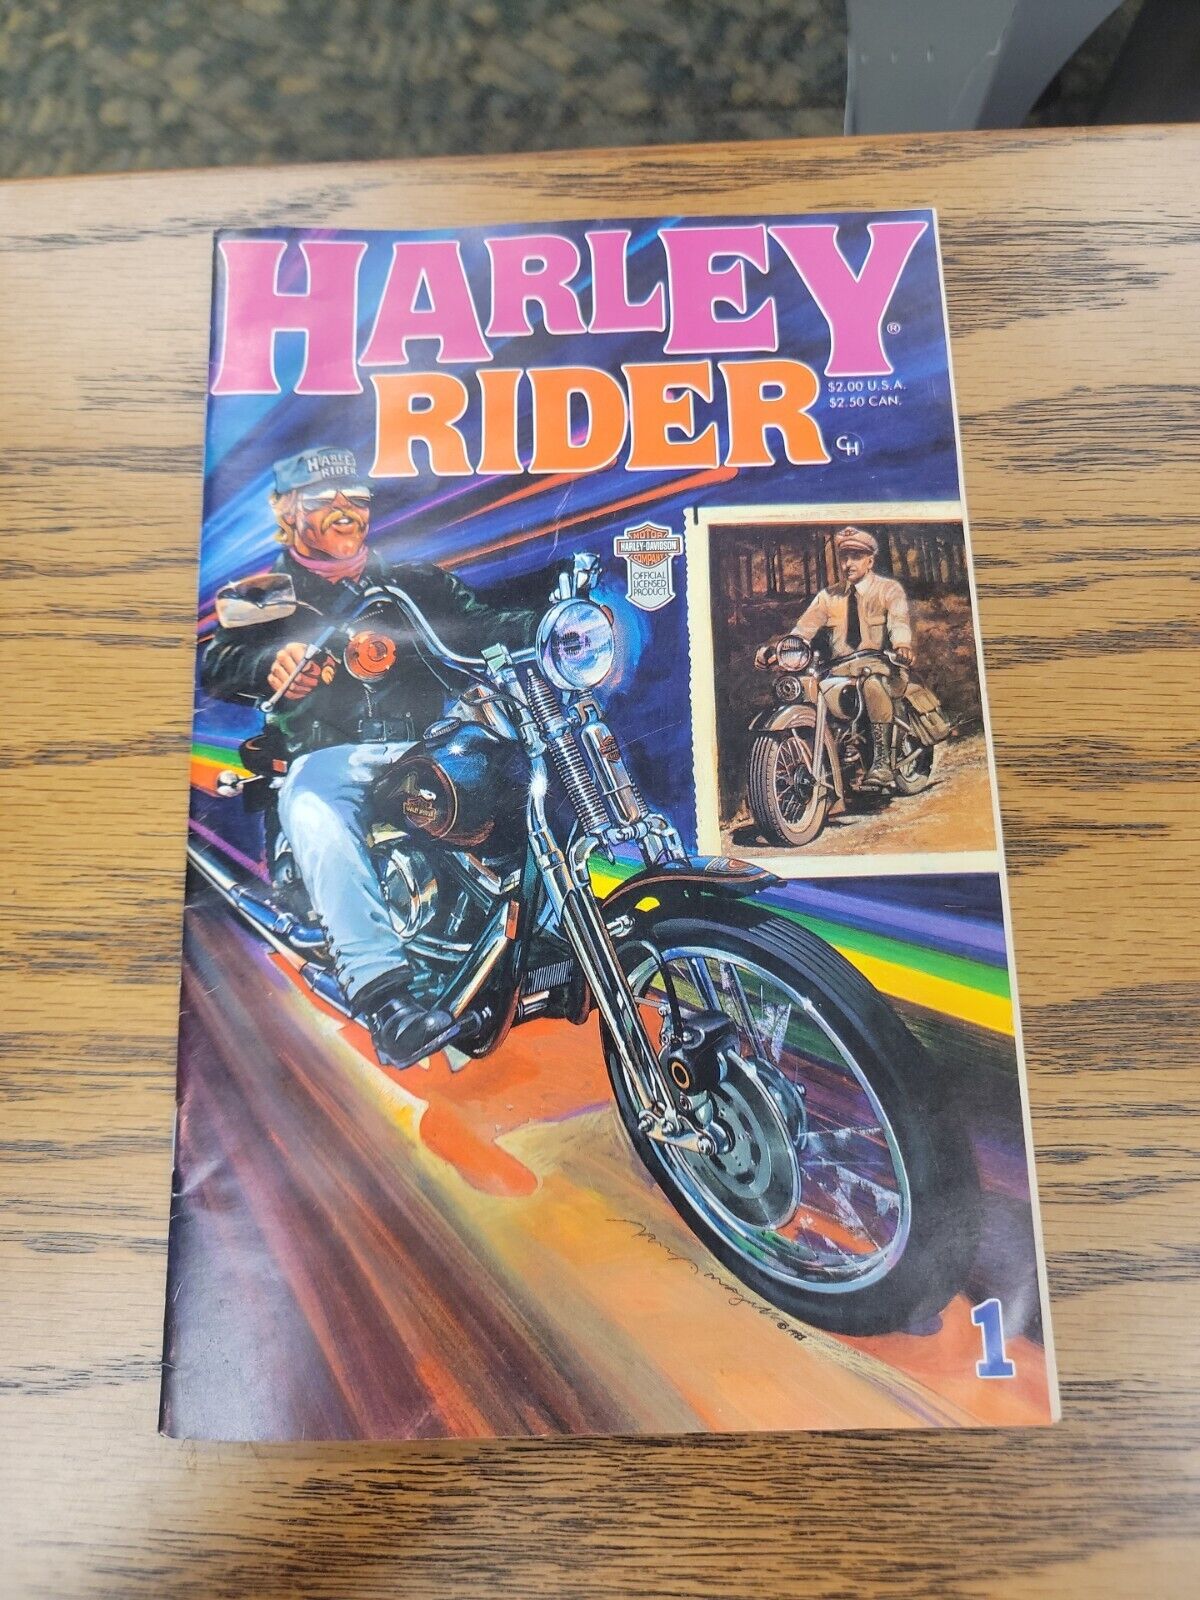 Harley Davidson Comic Harley Rider #1 Biker Carl Hungness Publishing 1988